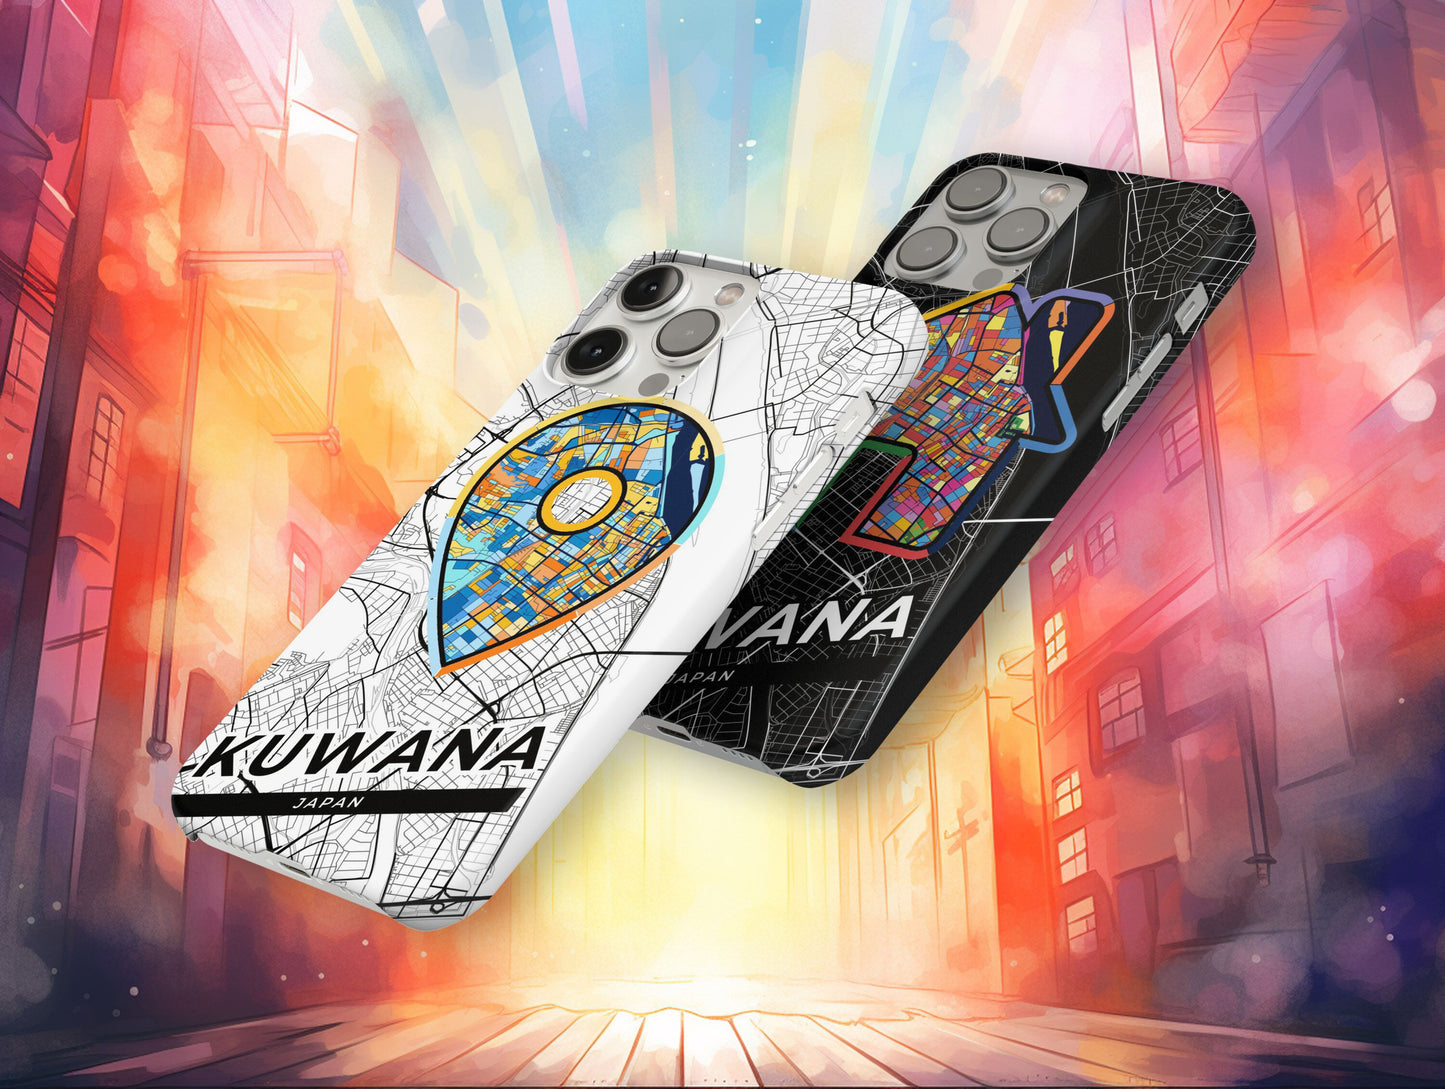 Kuwana Japan slim phone case with colorful icon. Birthday, wedding or housewarming gift. Couple match cases.